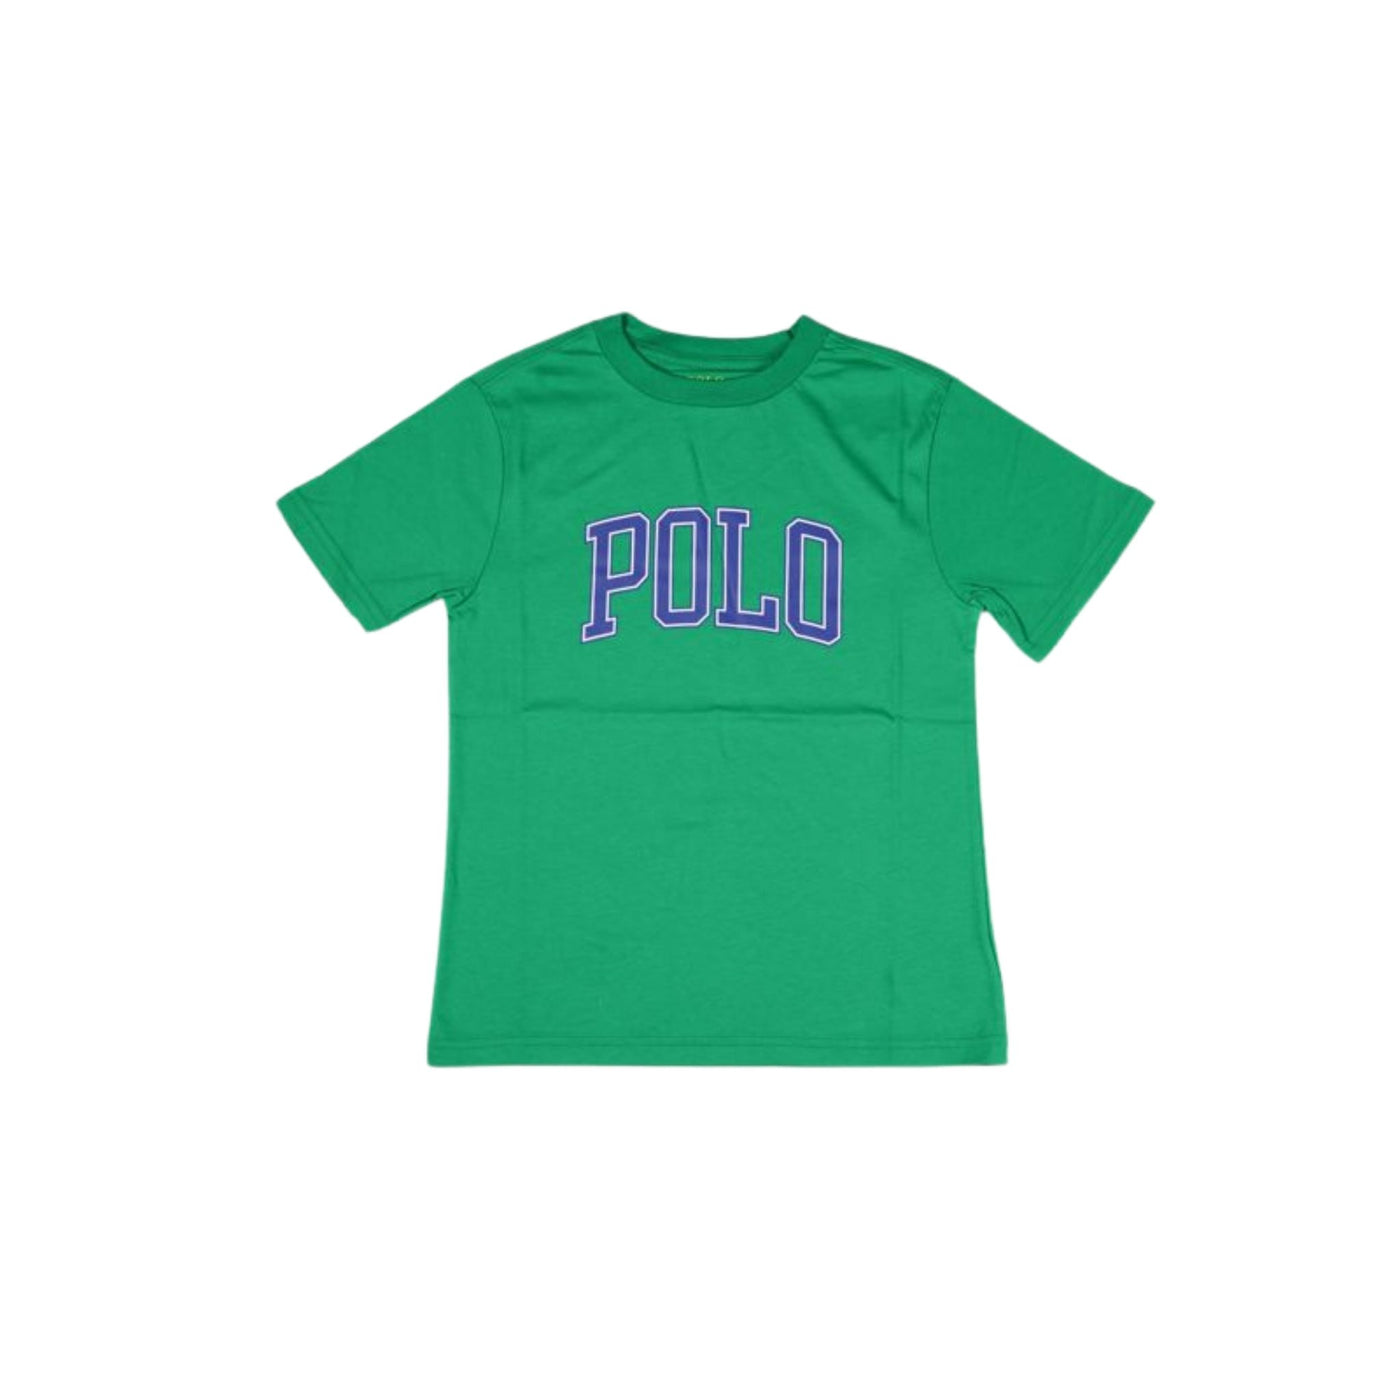 T-shirt verde con scritta Polo Ralph Lauren vista frontale